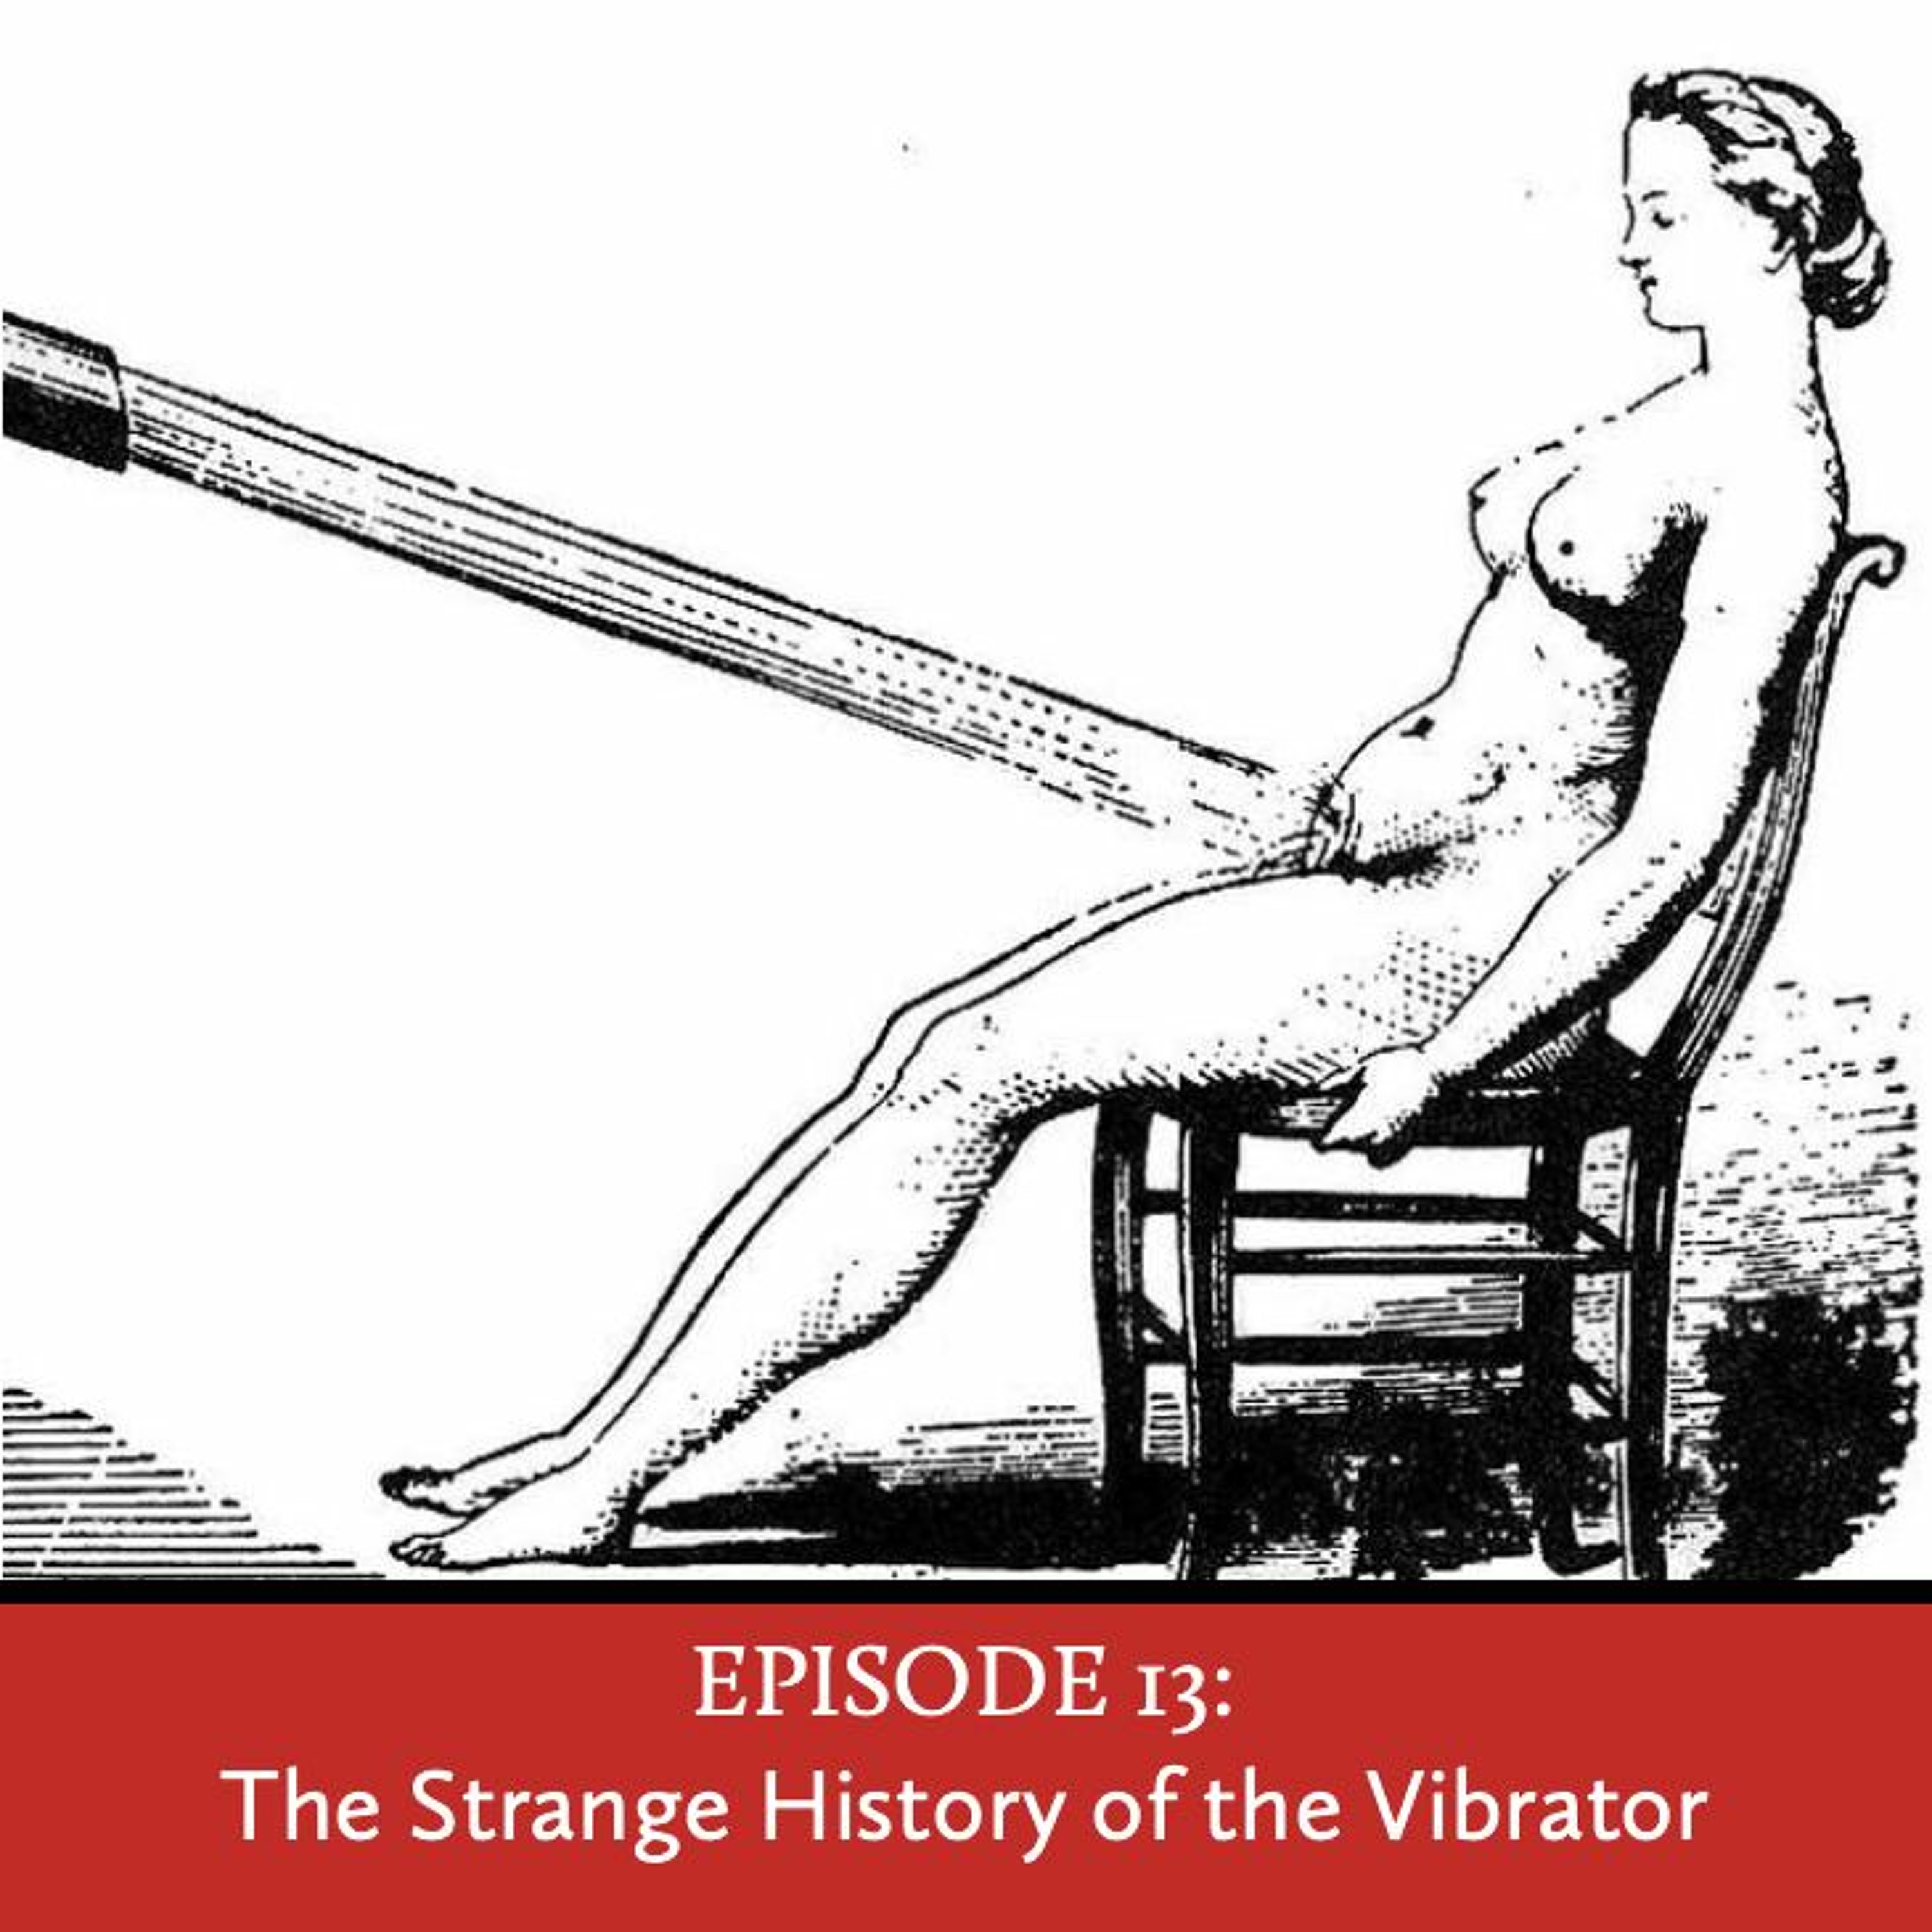 Episode 13: The Strange History of the Vibrator